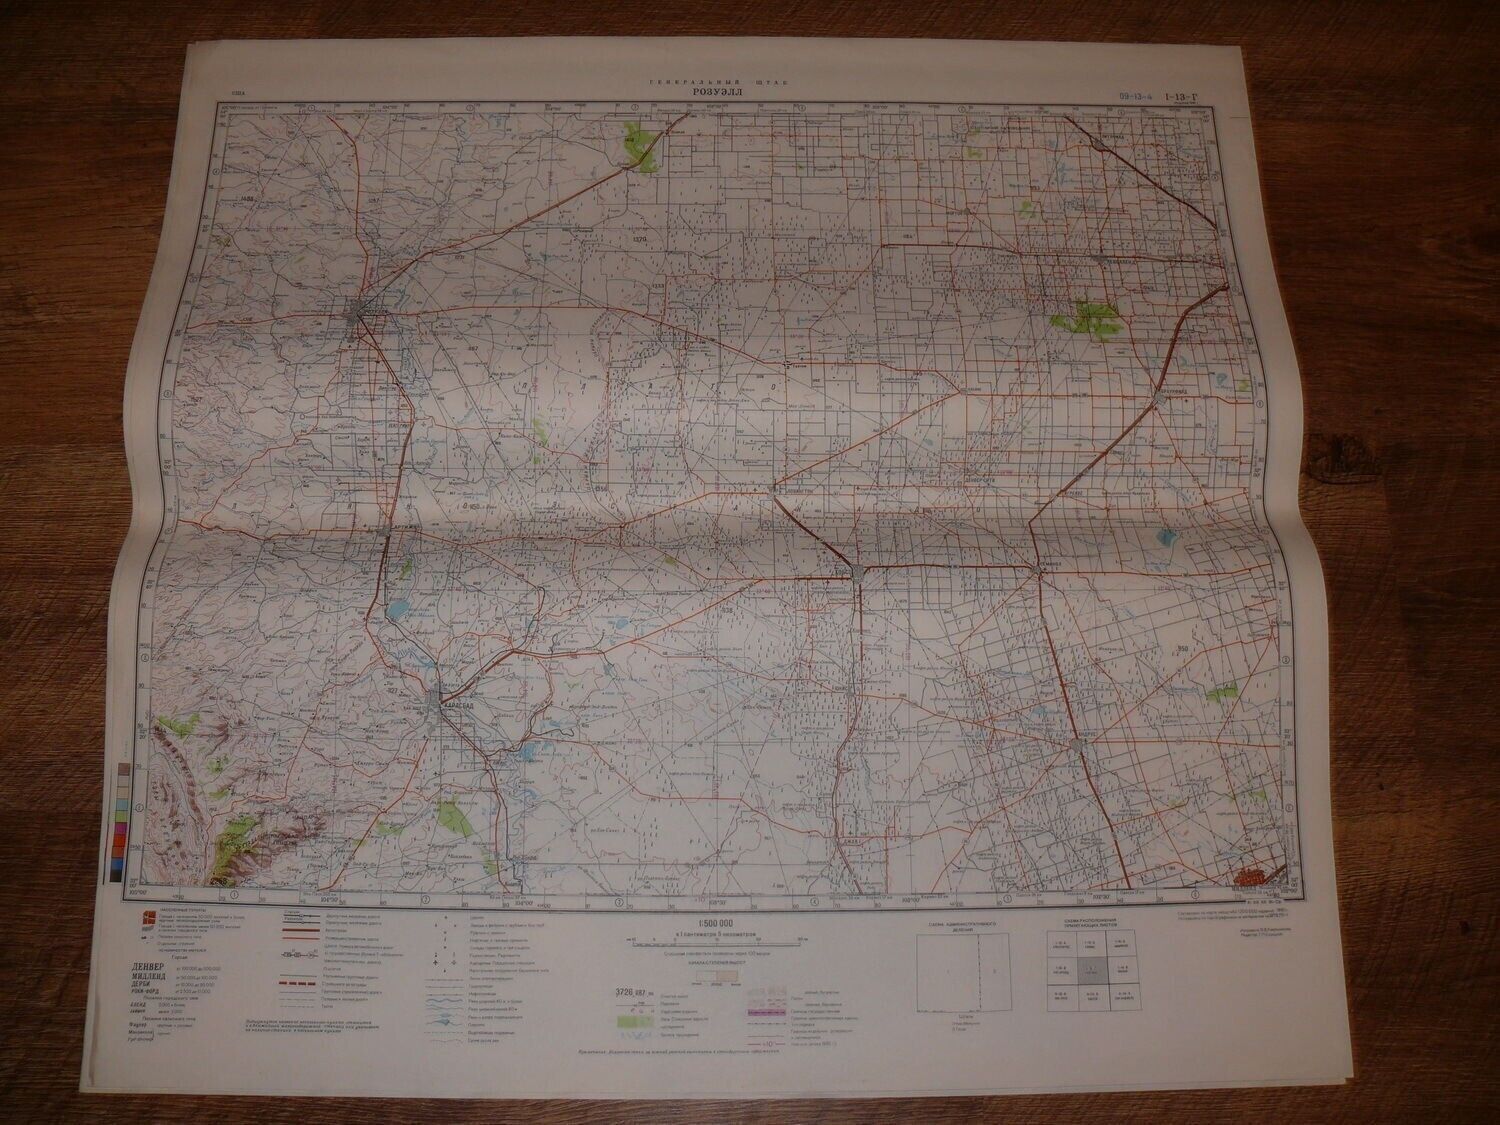 TOP SECRET Soviet Army Military Topographic Map Nuevo Laredo Monclova Mexico USA